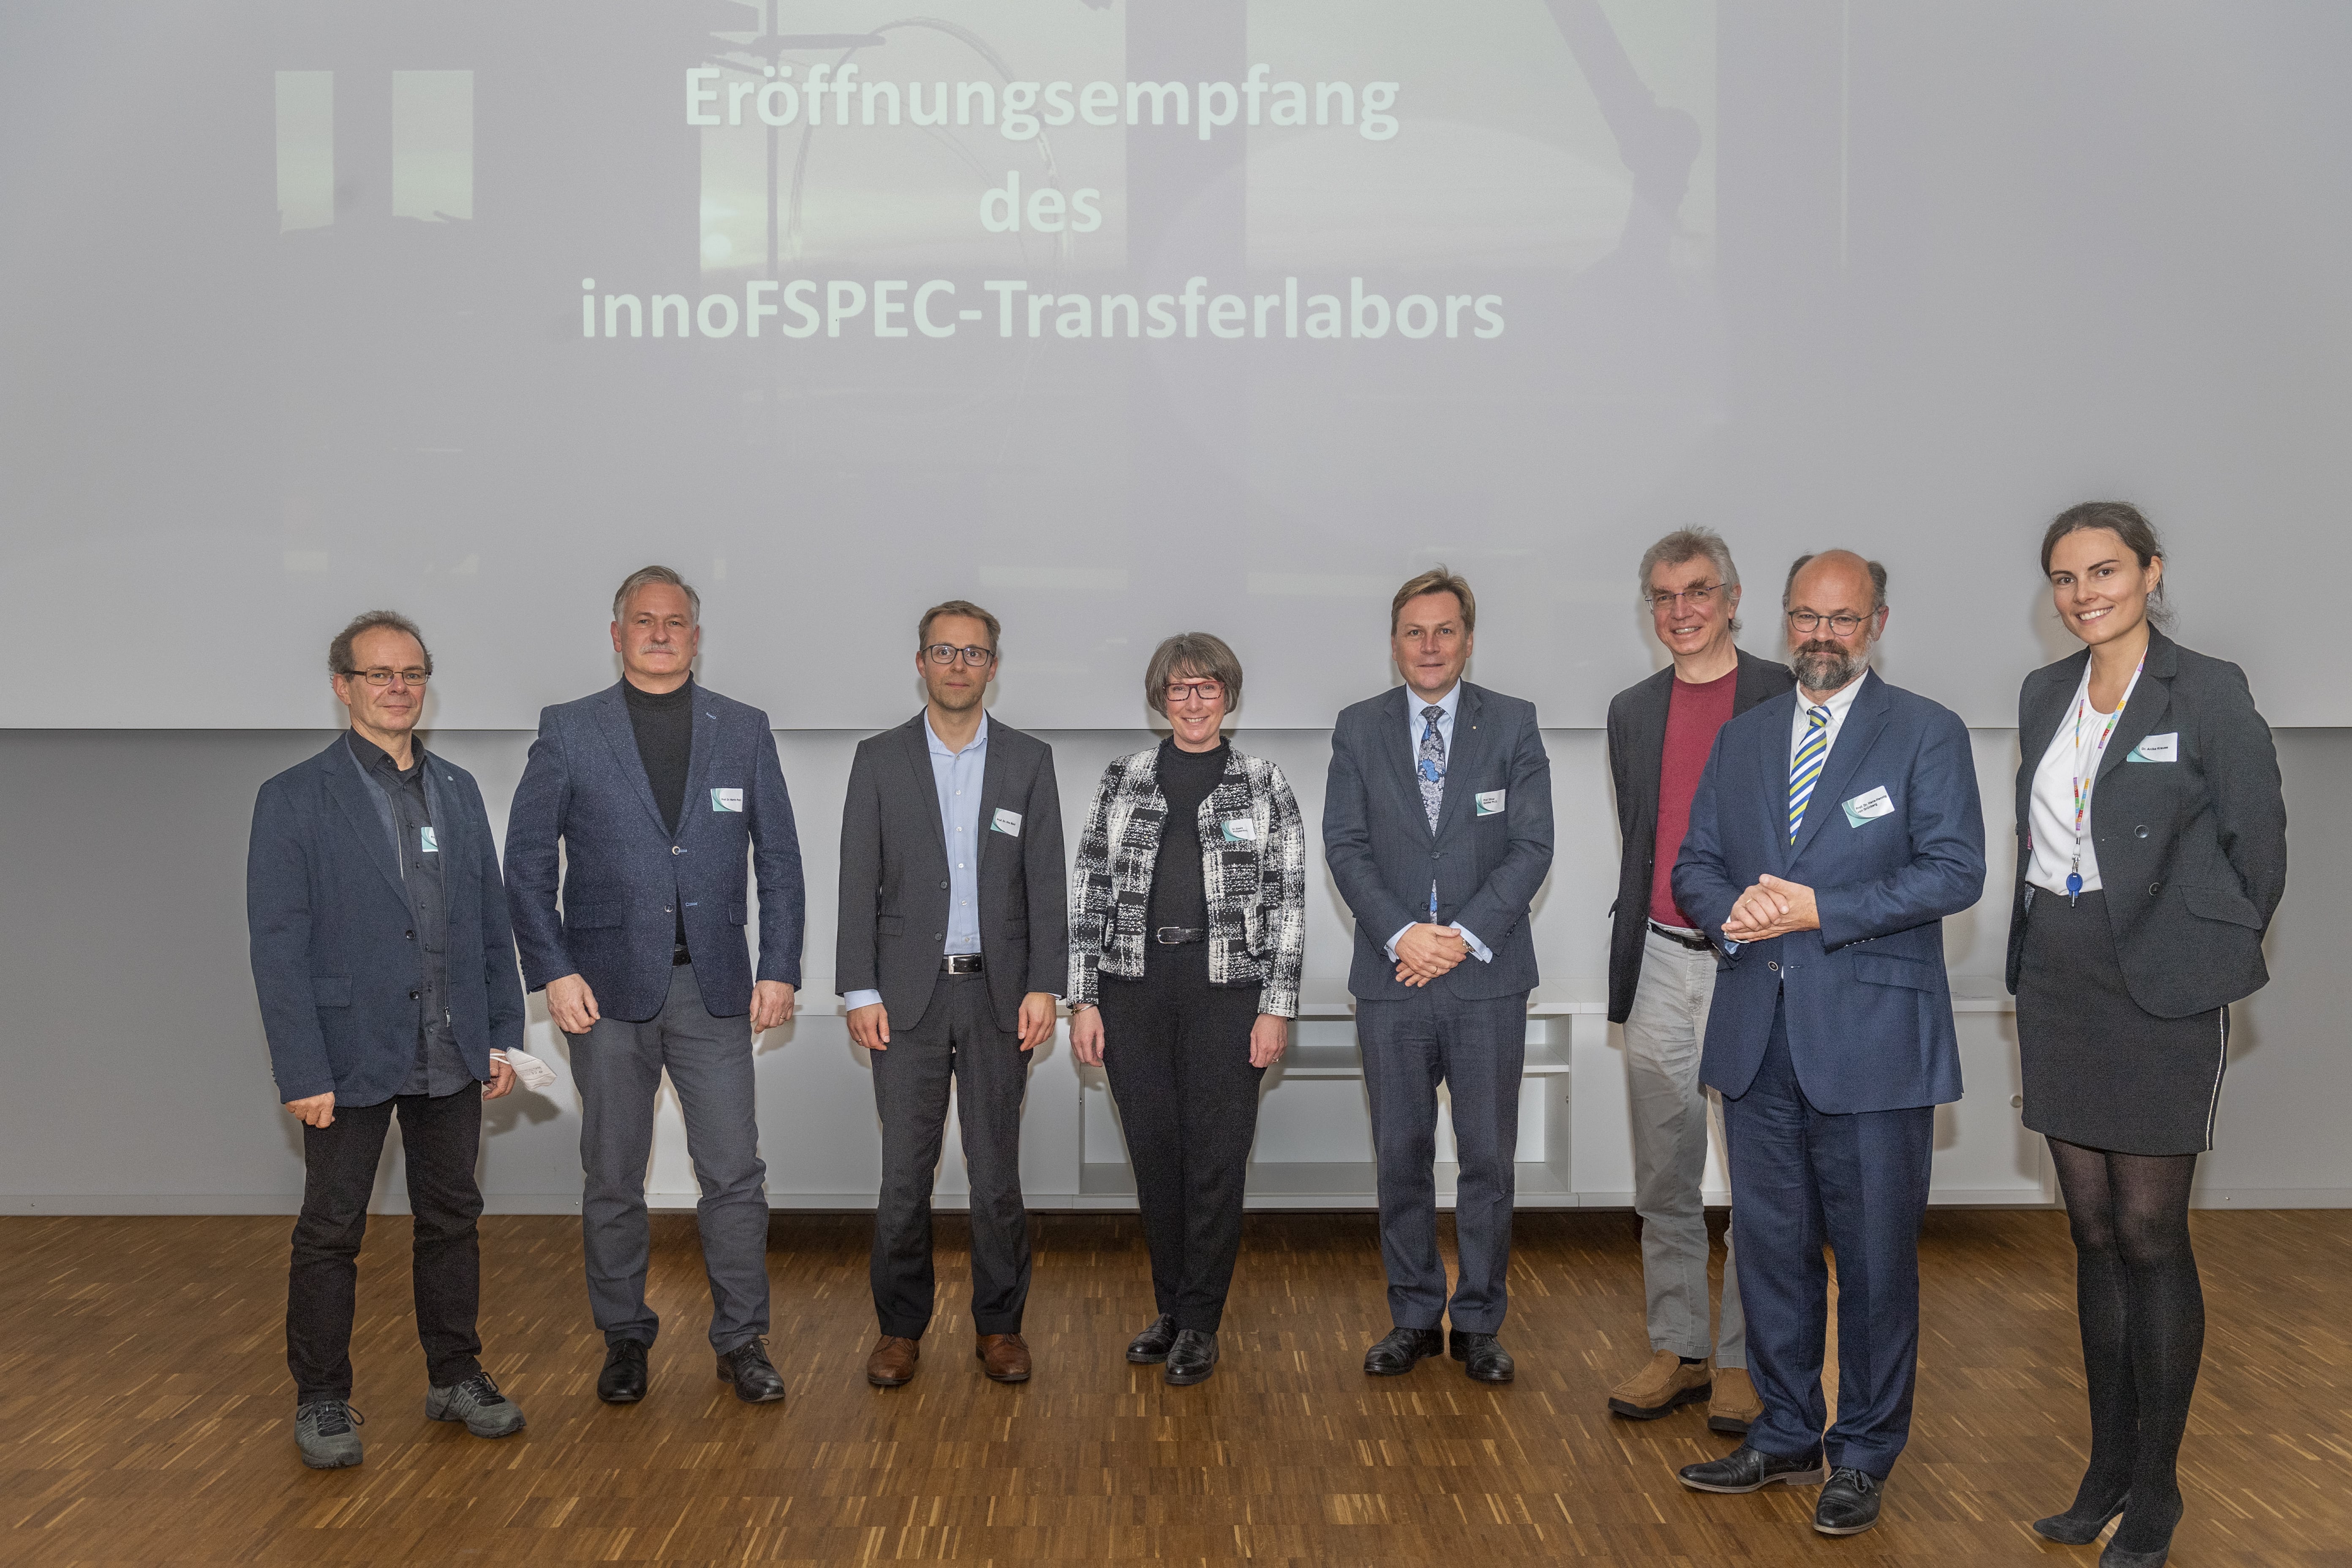 Celebratory opening reception of the innoFSPEC-Transferlab